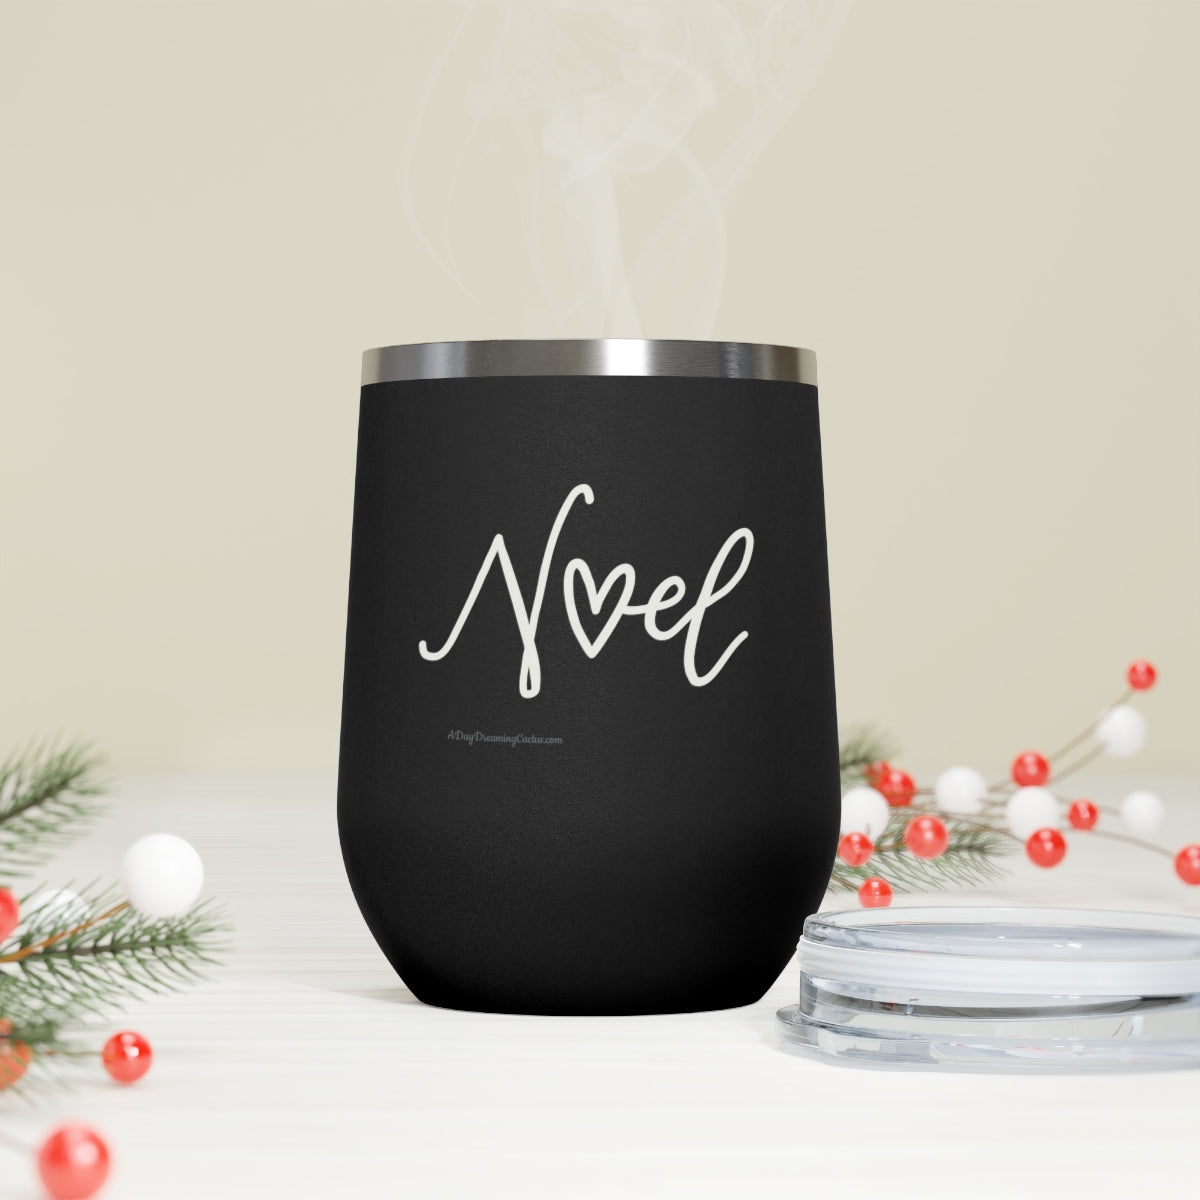 Noel Black and Silver 12oz Insulated Wine Tumbler - Cup Mug Drinkware